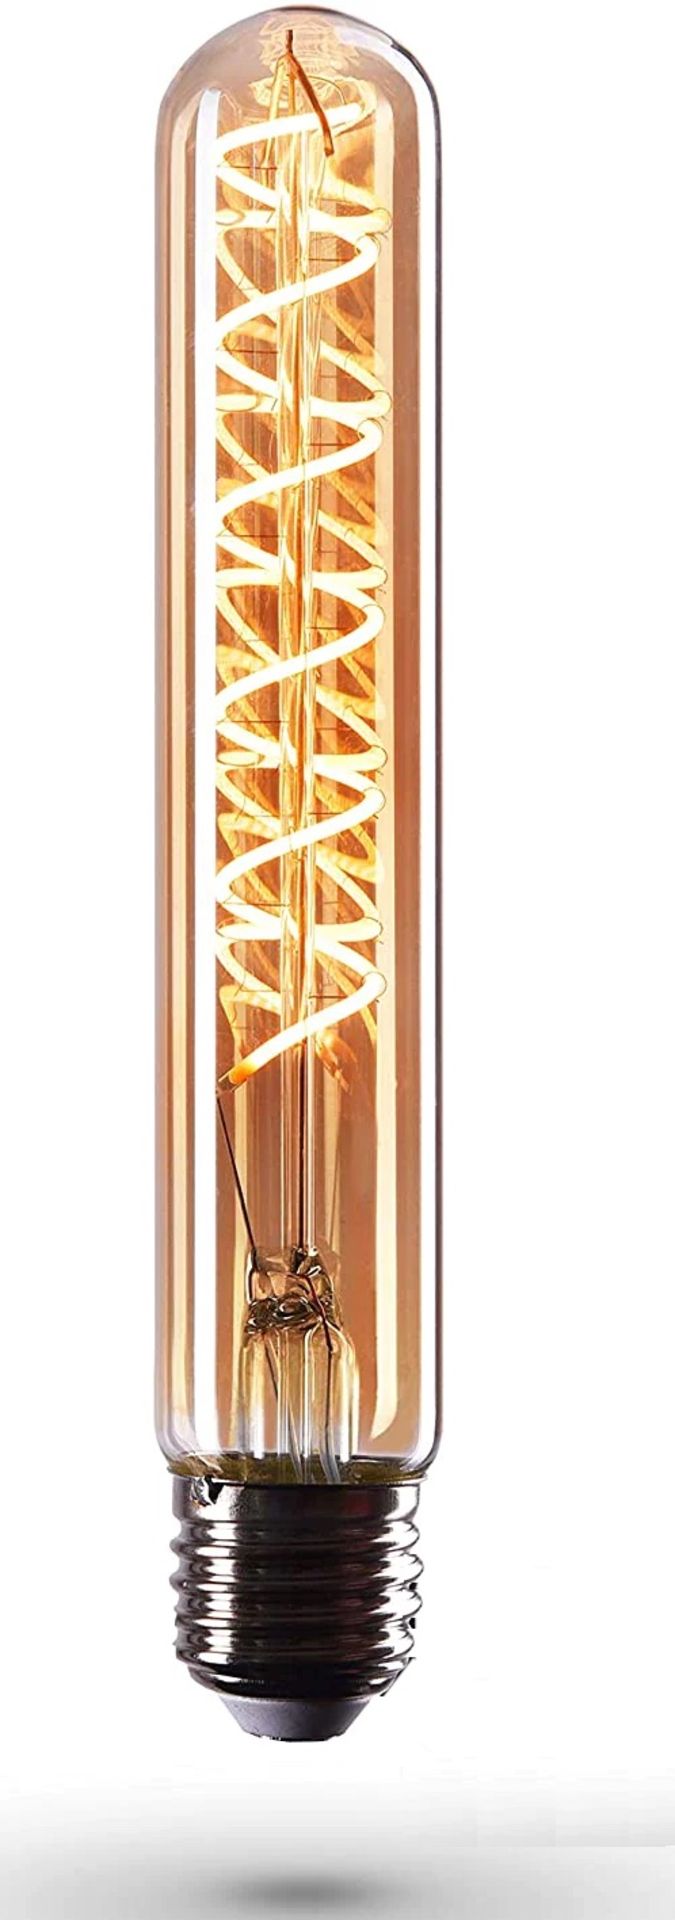 24 x CROWN LED Edison Flat Pipe Lightbulb 4W/40W Warm White - NEW & BOXED - BIG RRP! - Image 5 of 7